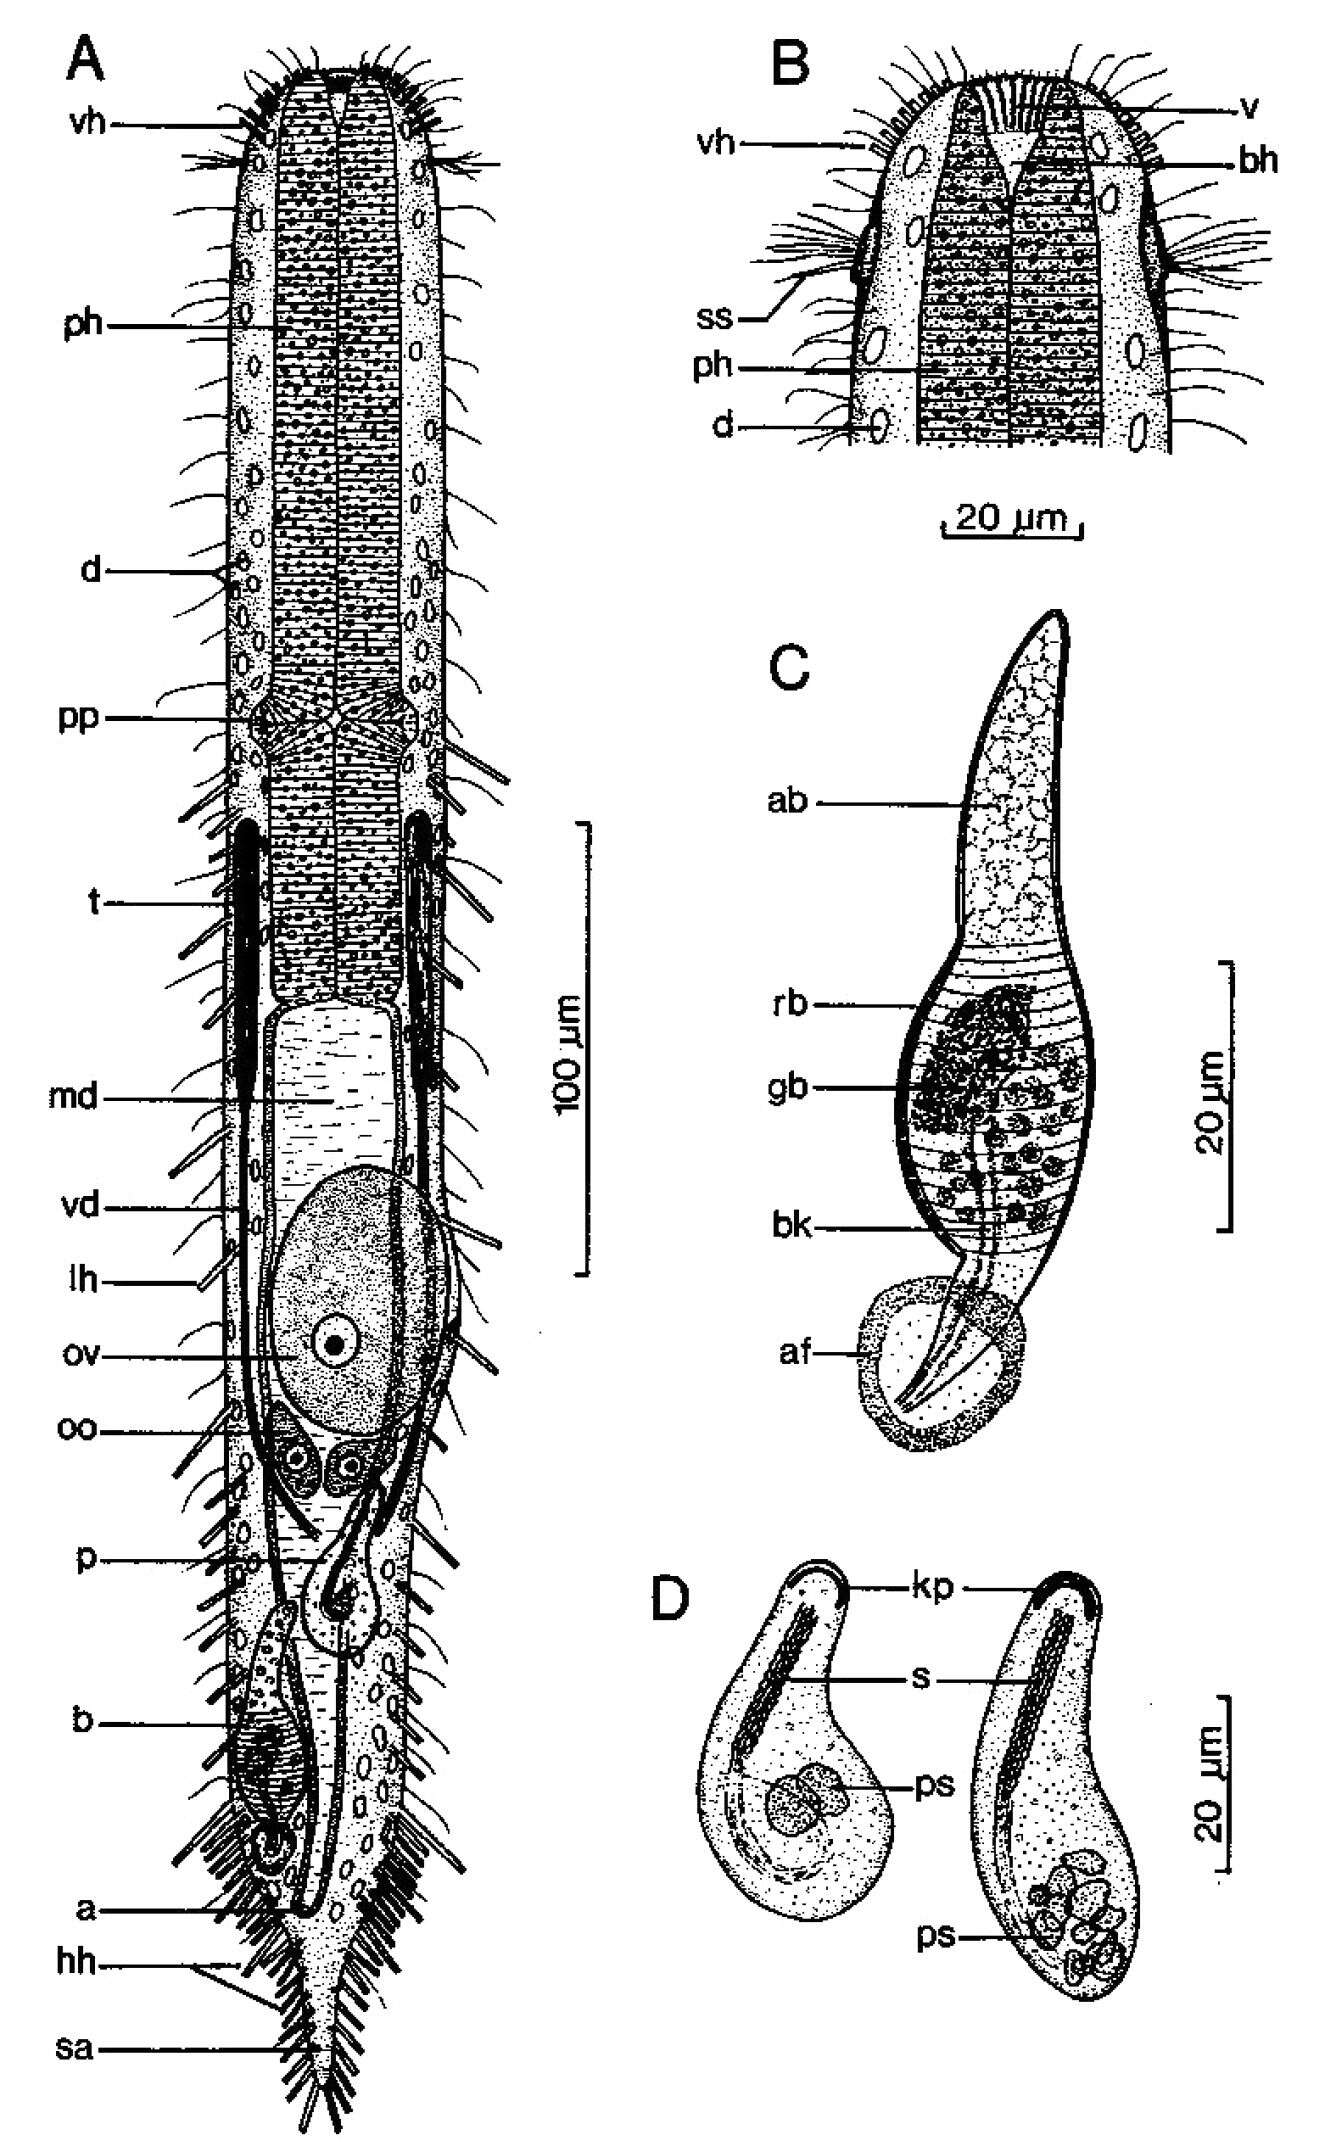 Plancia ëd Macrodasys scleracrus Hummon 2011